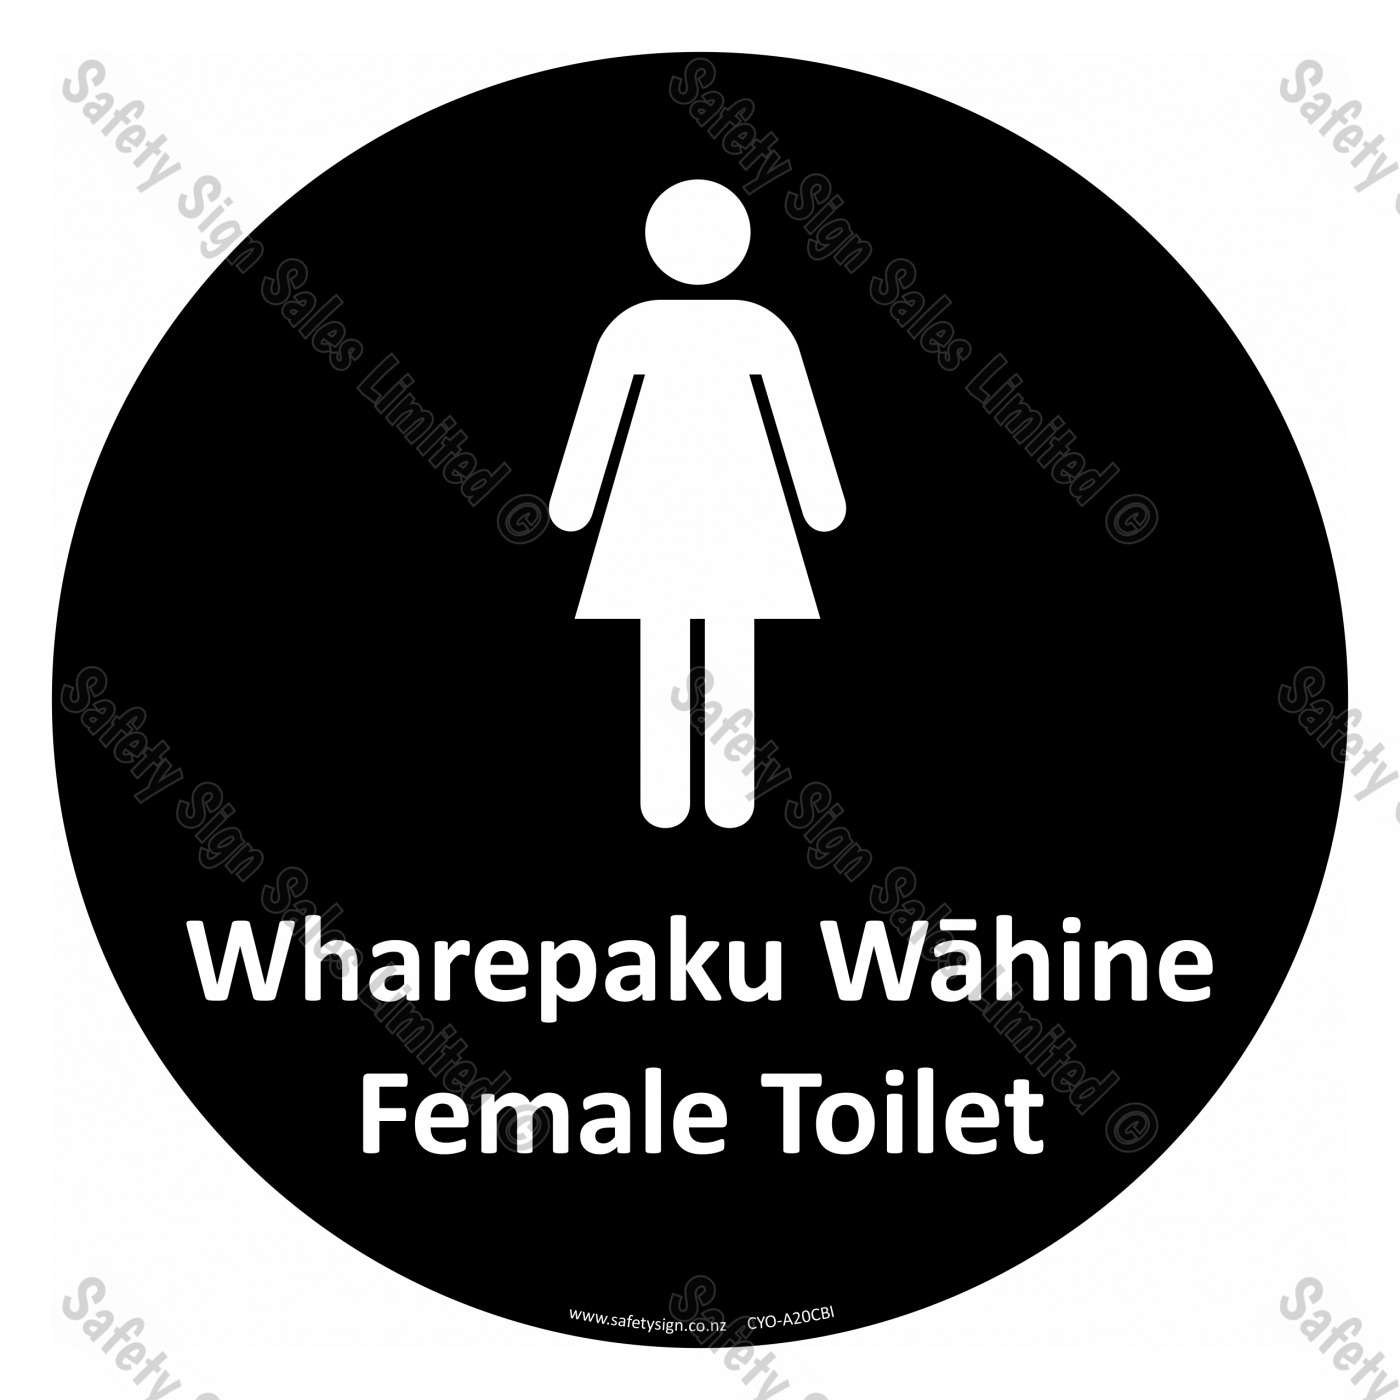 Wharepaku Wāhine Female Toilet